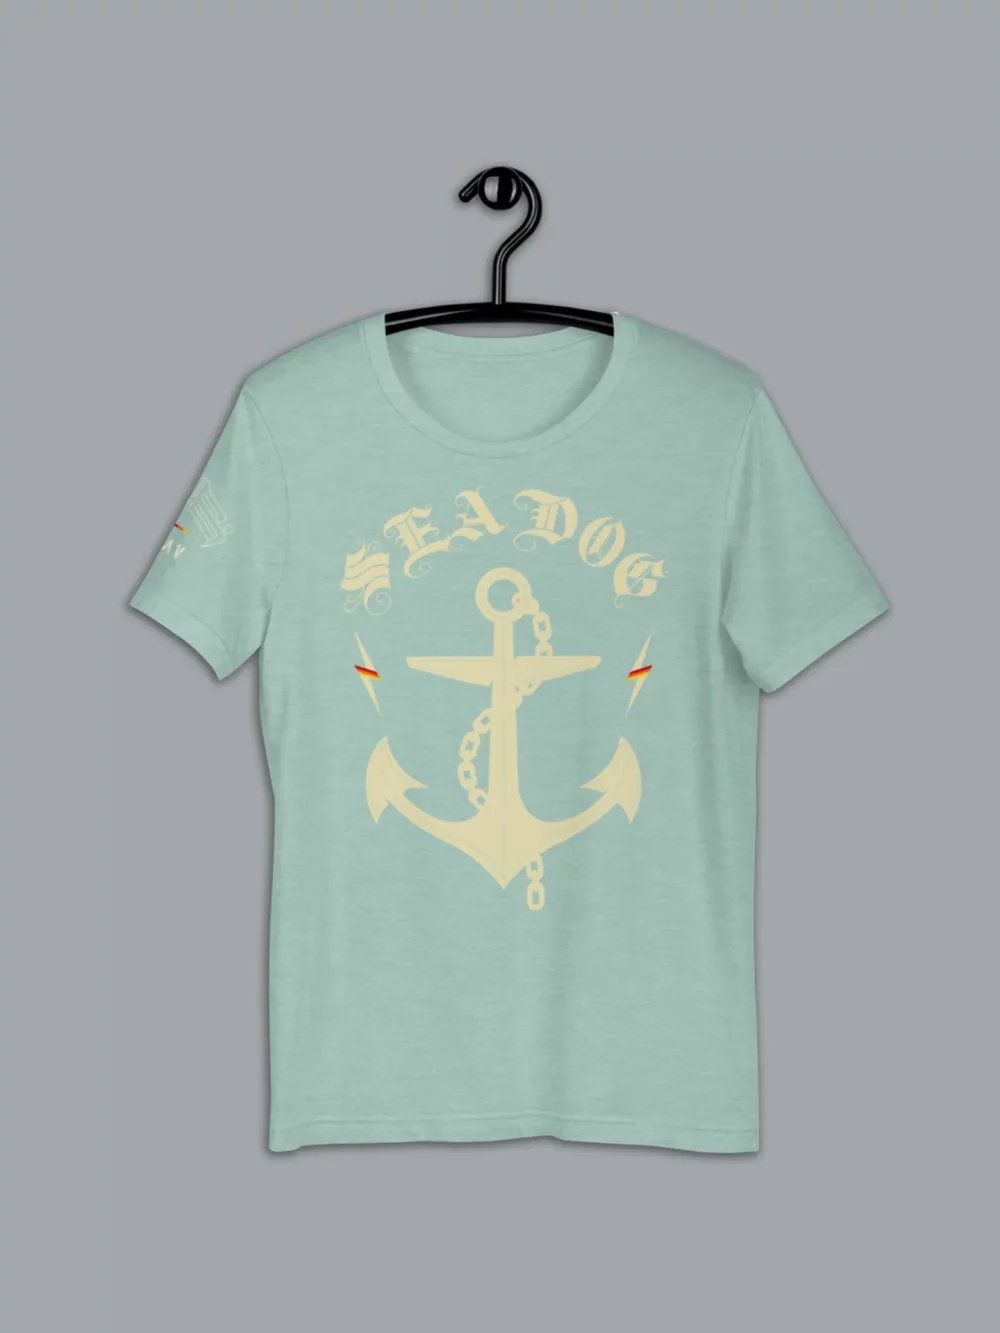 Sea Dog premium classic short sleeve t-shirt by KOAV